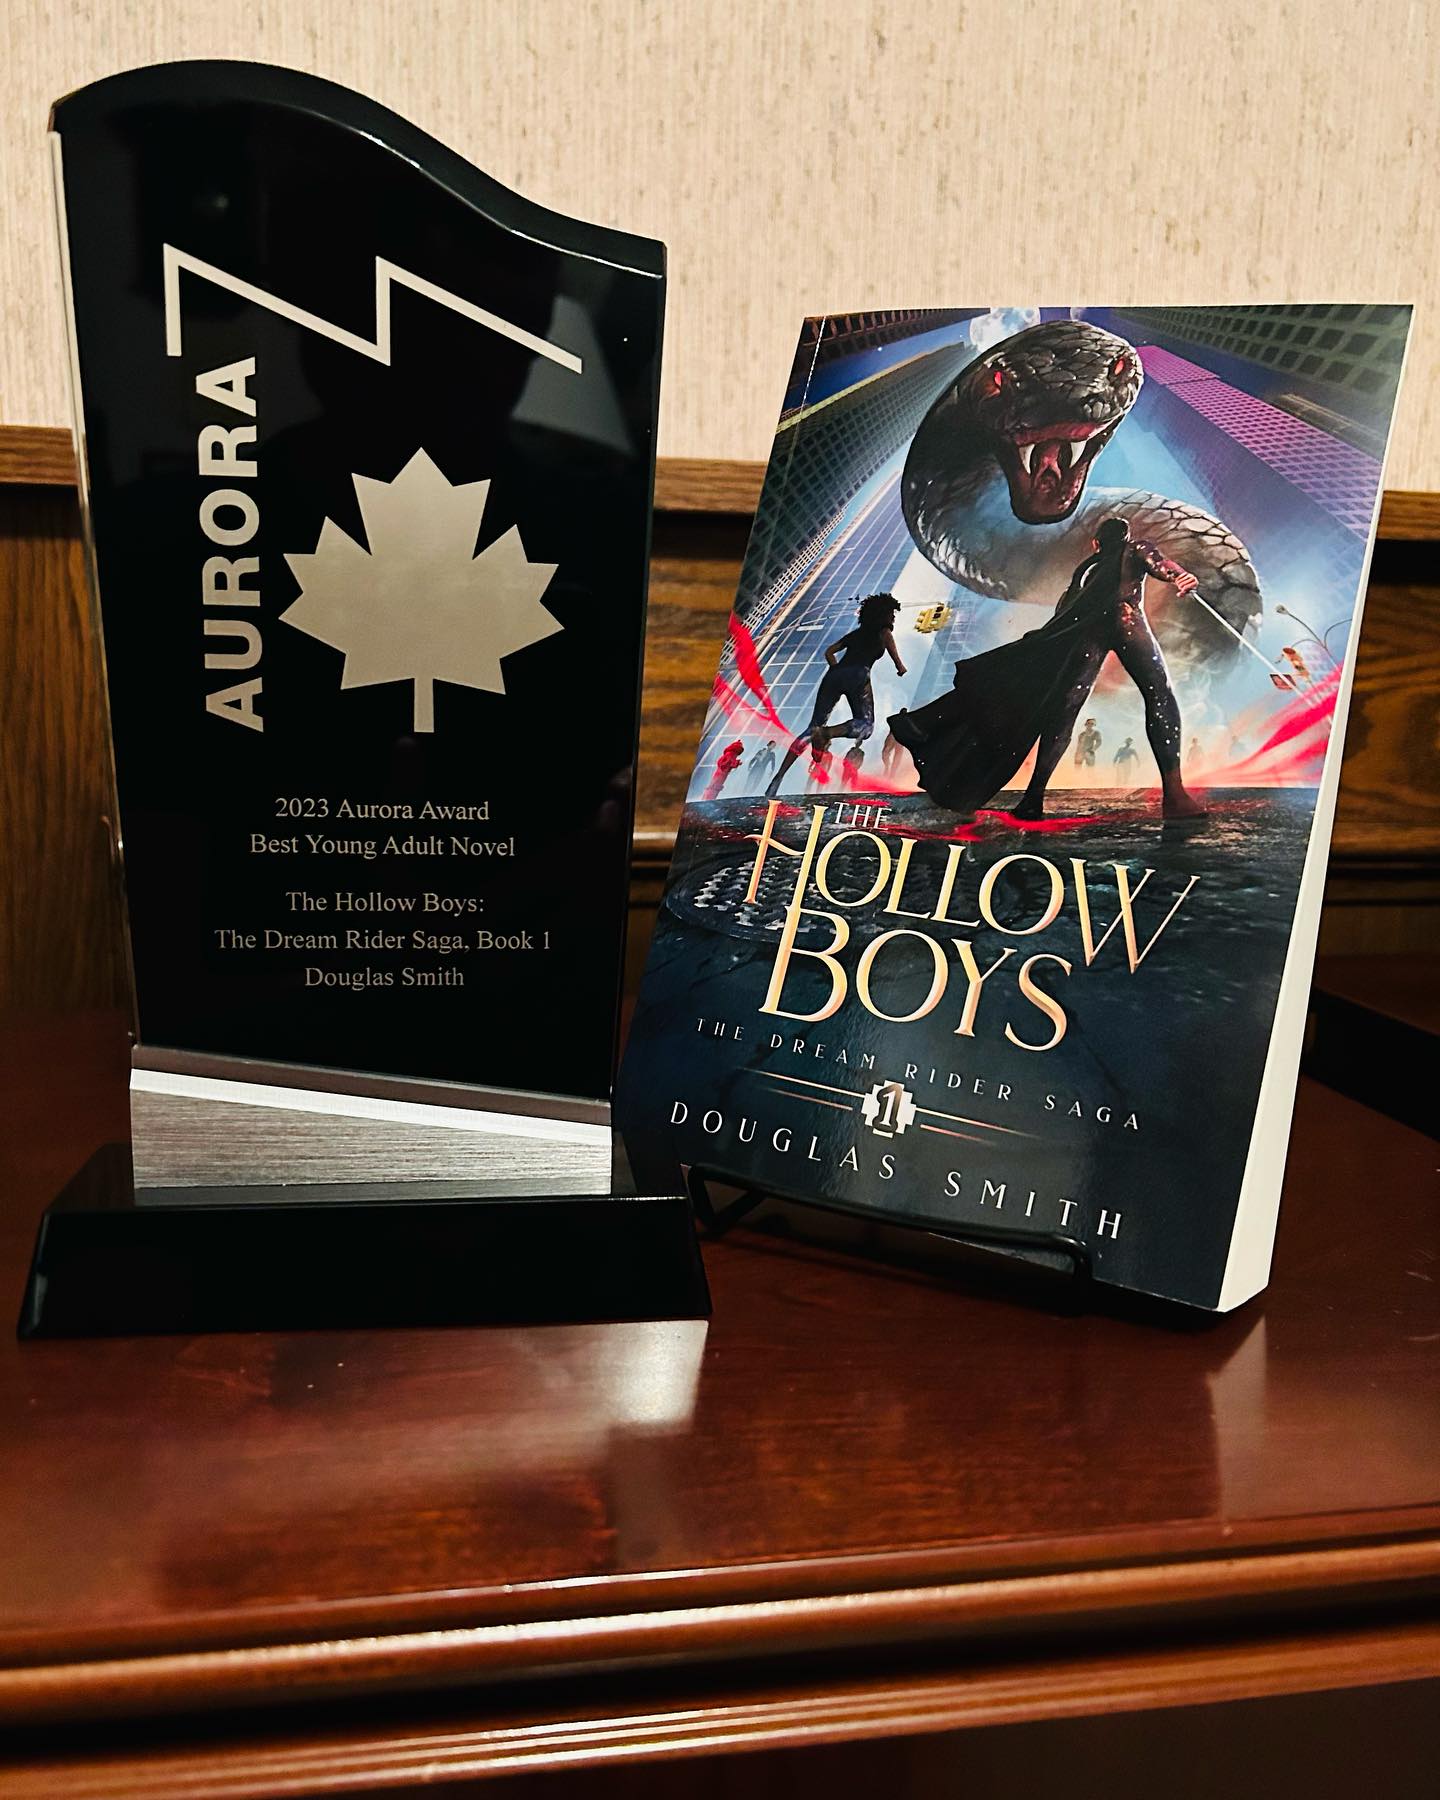 2023 Aurora Award trophy and book